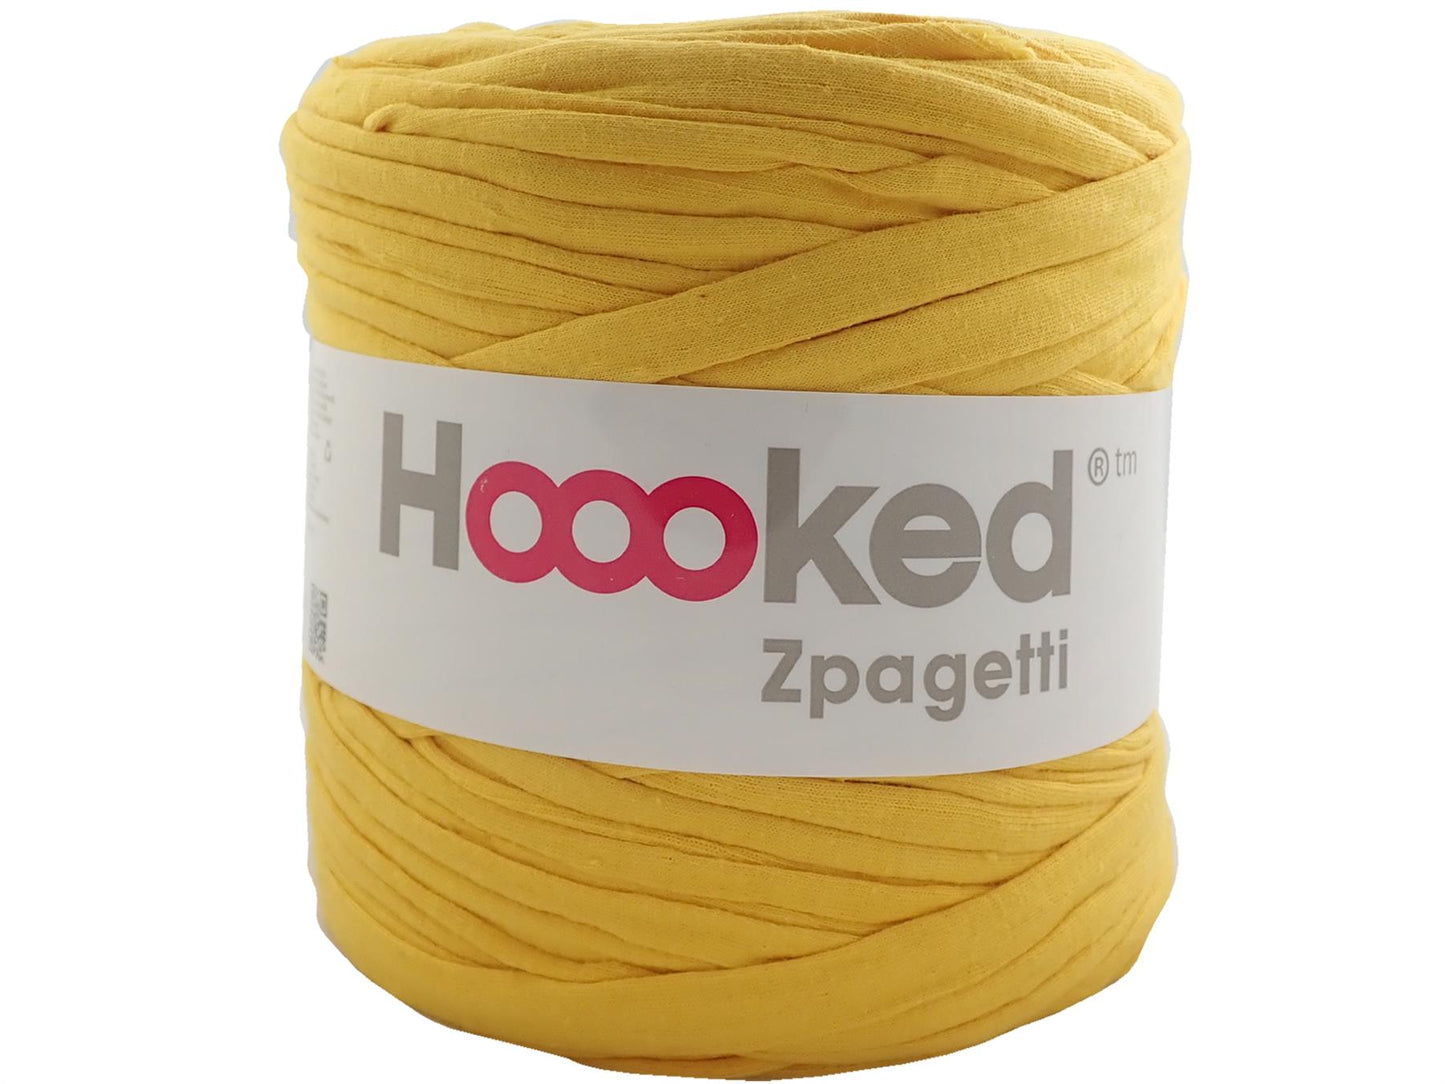 Hoooked Zpagetti Sunflower Yellow Cotton T-Shirt Yarn - 120M 700g